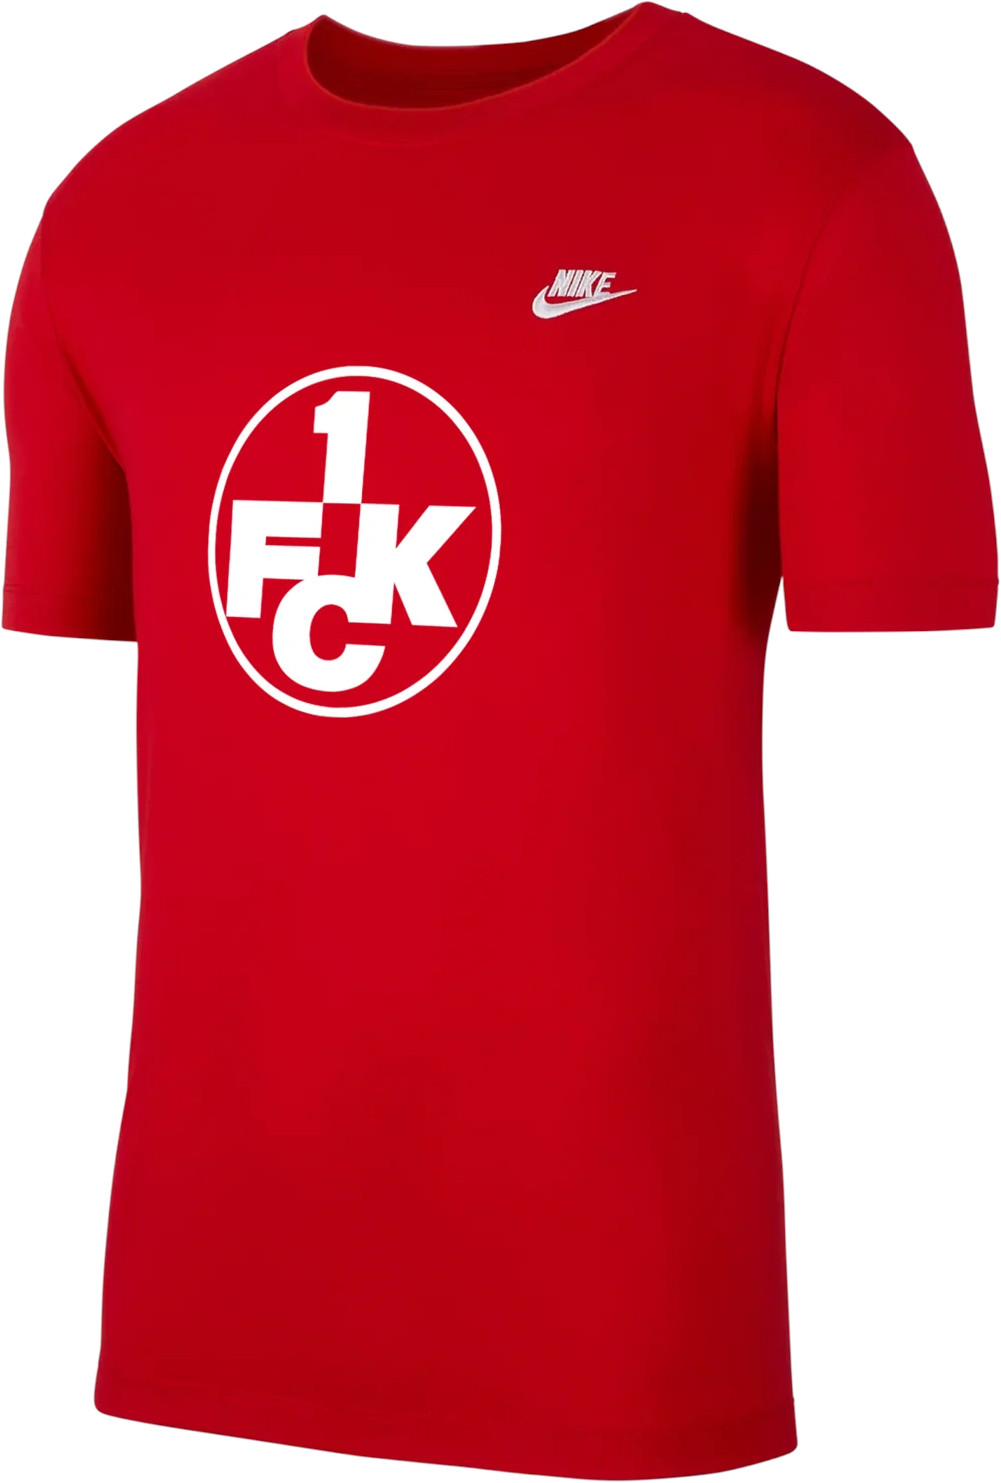 Pánské tričko s krátkým rukávem Nike 1.FC Kaiserslautern Club